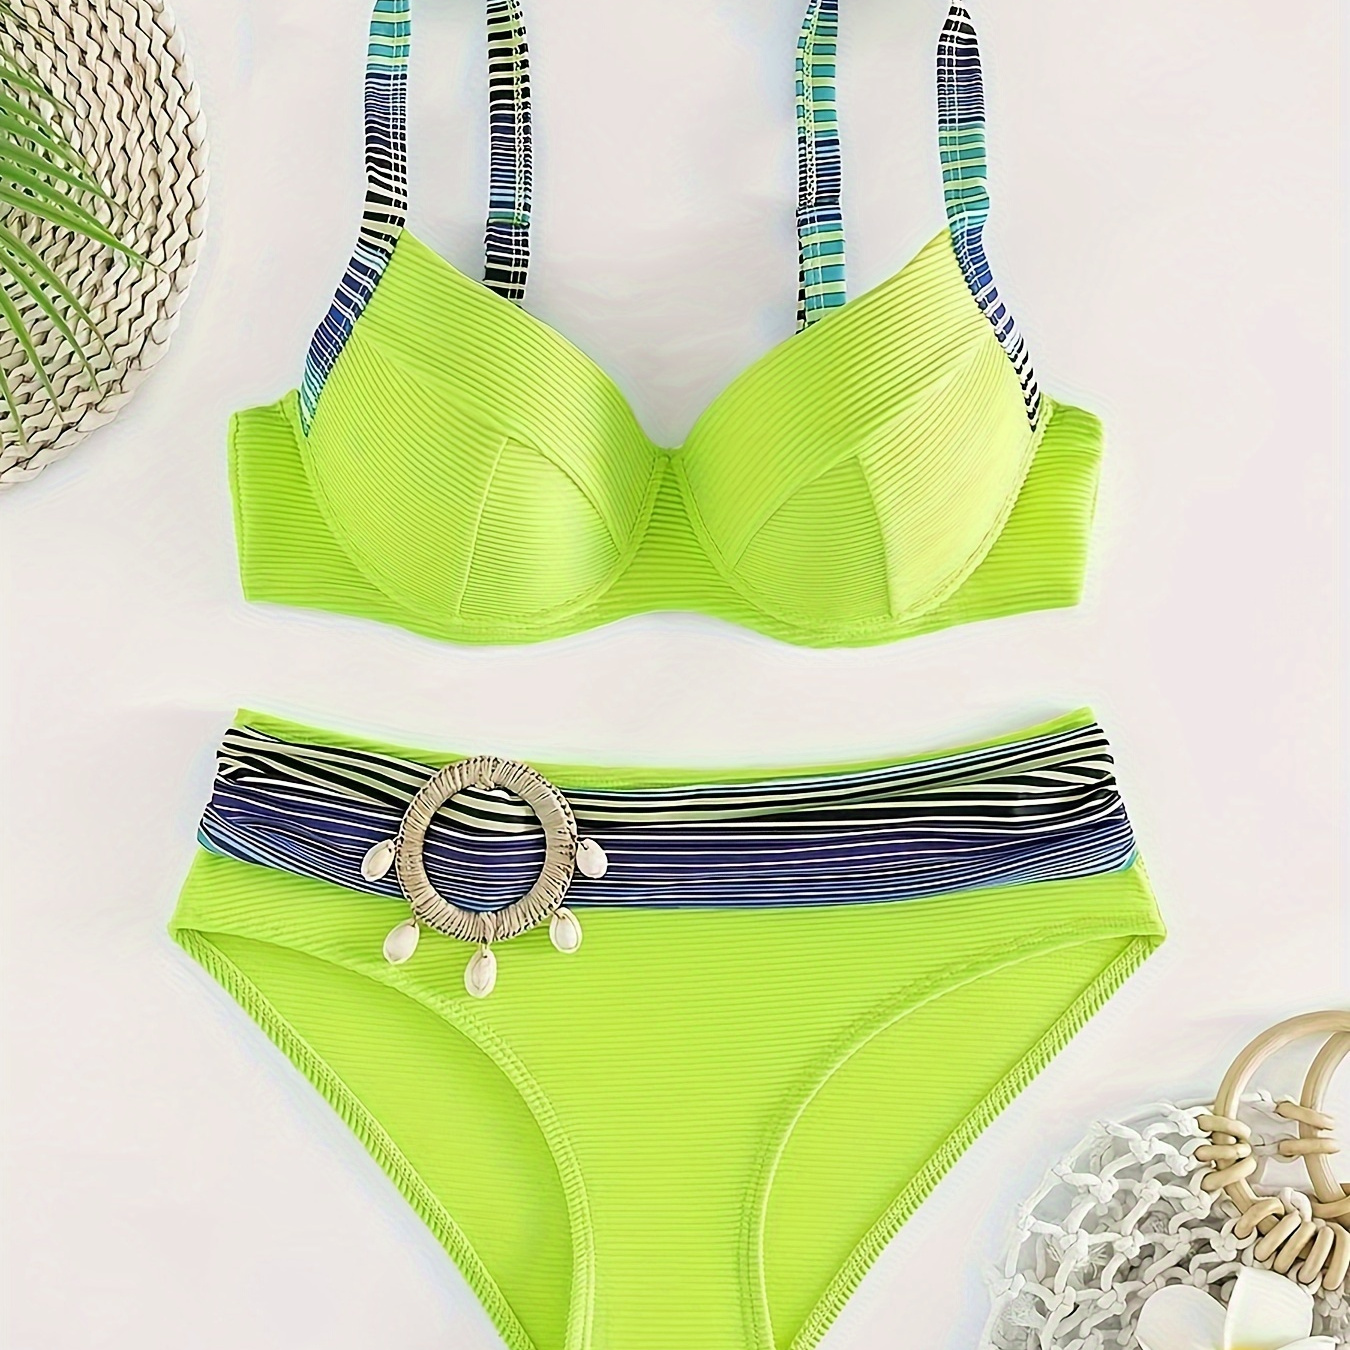 

Shell Ring Decor V Neck 2 Piece Set Bikini, High Stretch Striped Push Up Stylish Swimsuits, Women's Swimwear & Clothing